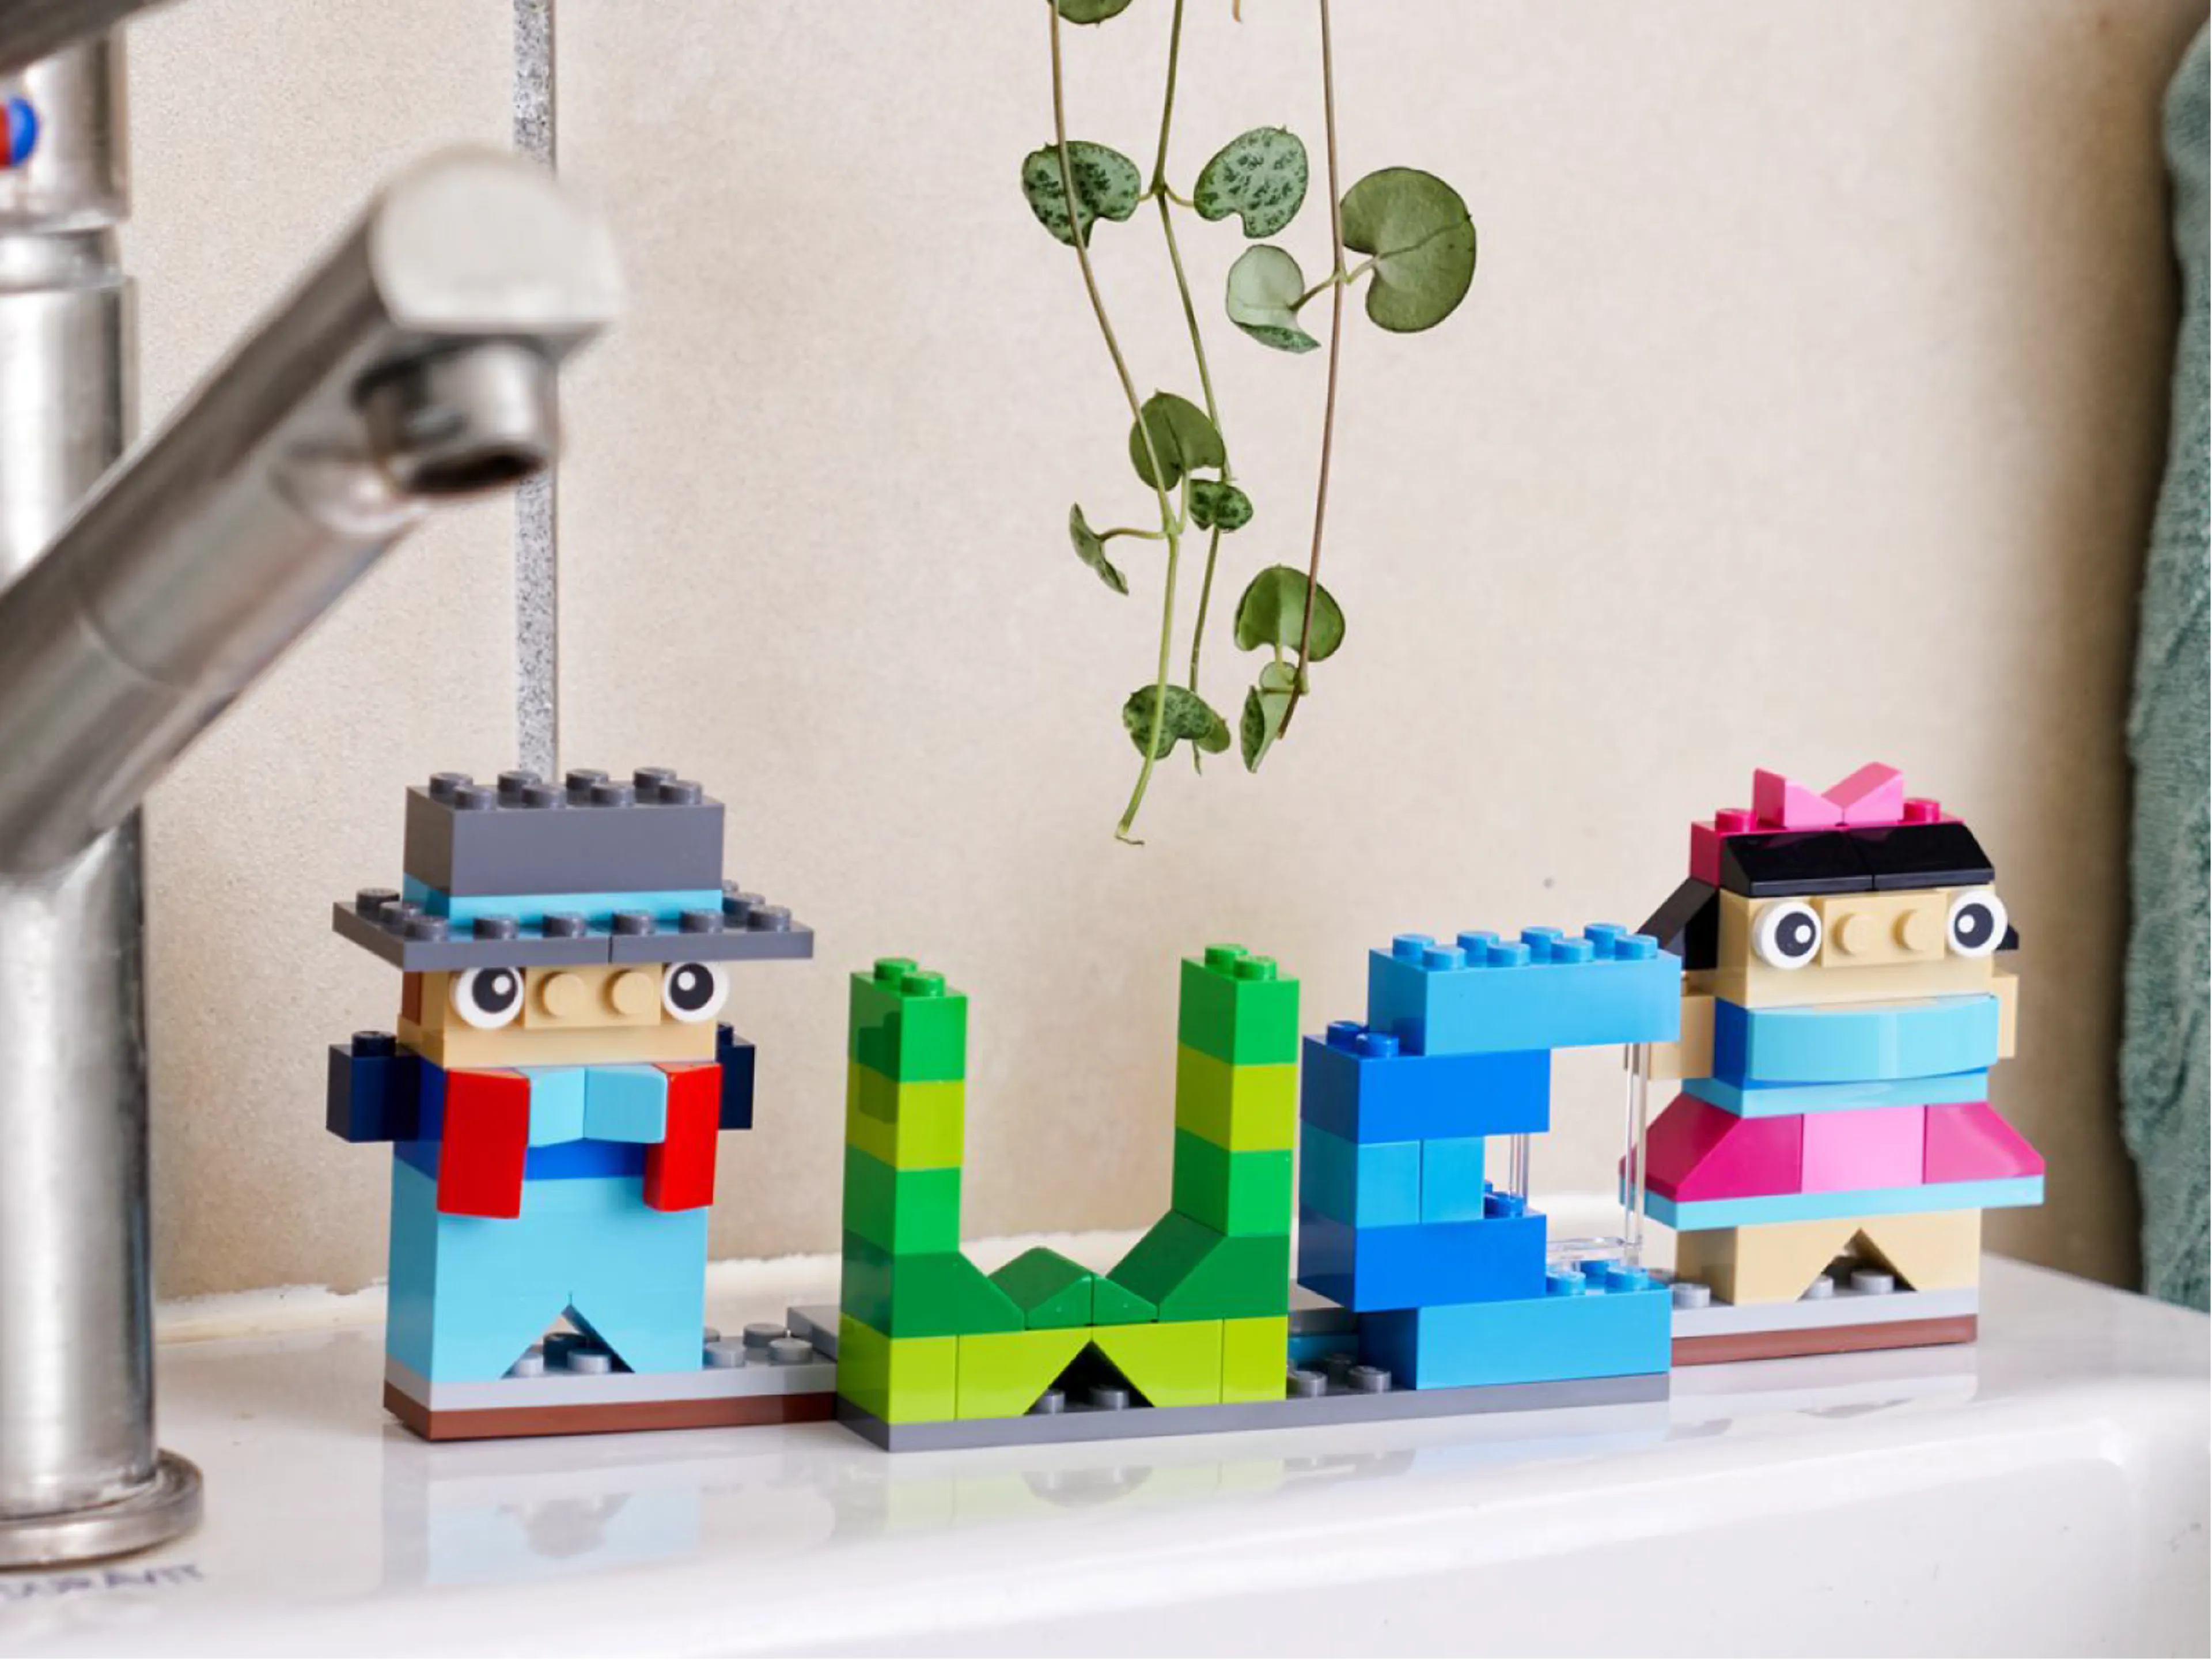 LEGO Bricks spelling WC